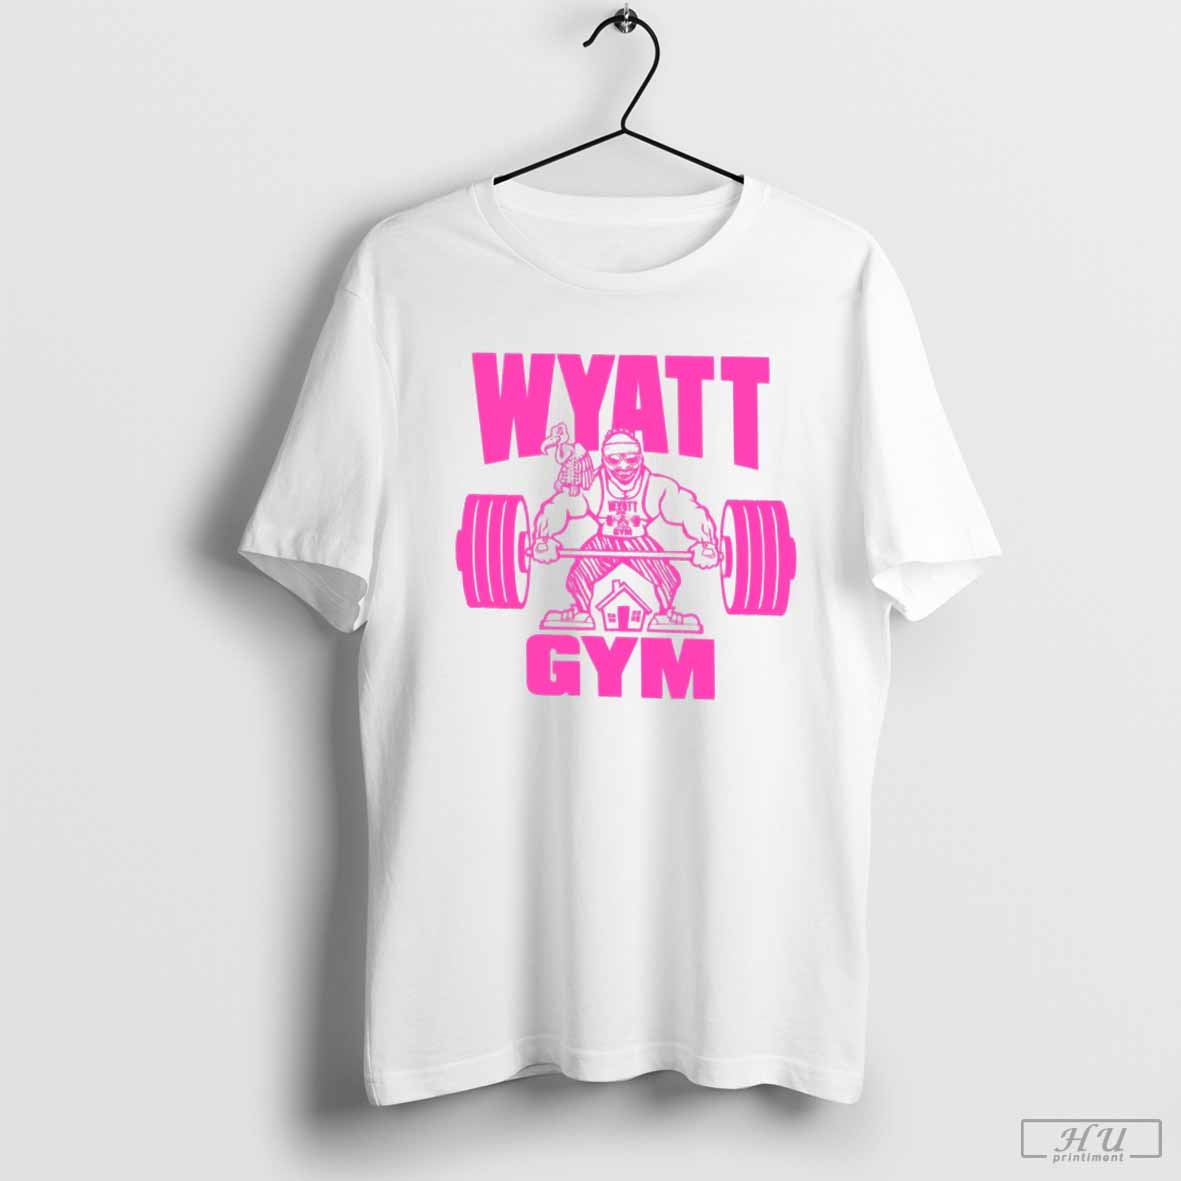 WWE Bray Wyatt Wyatt Gym Authentic T-Shirt - Printiment